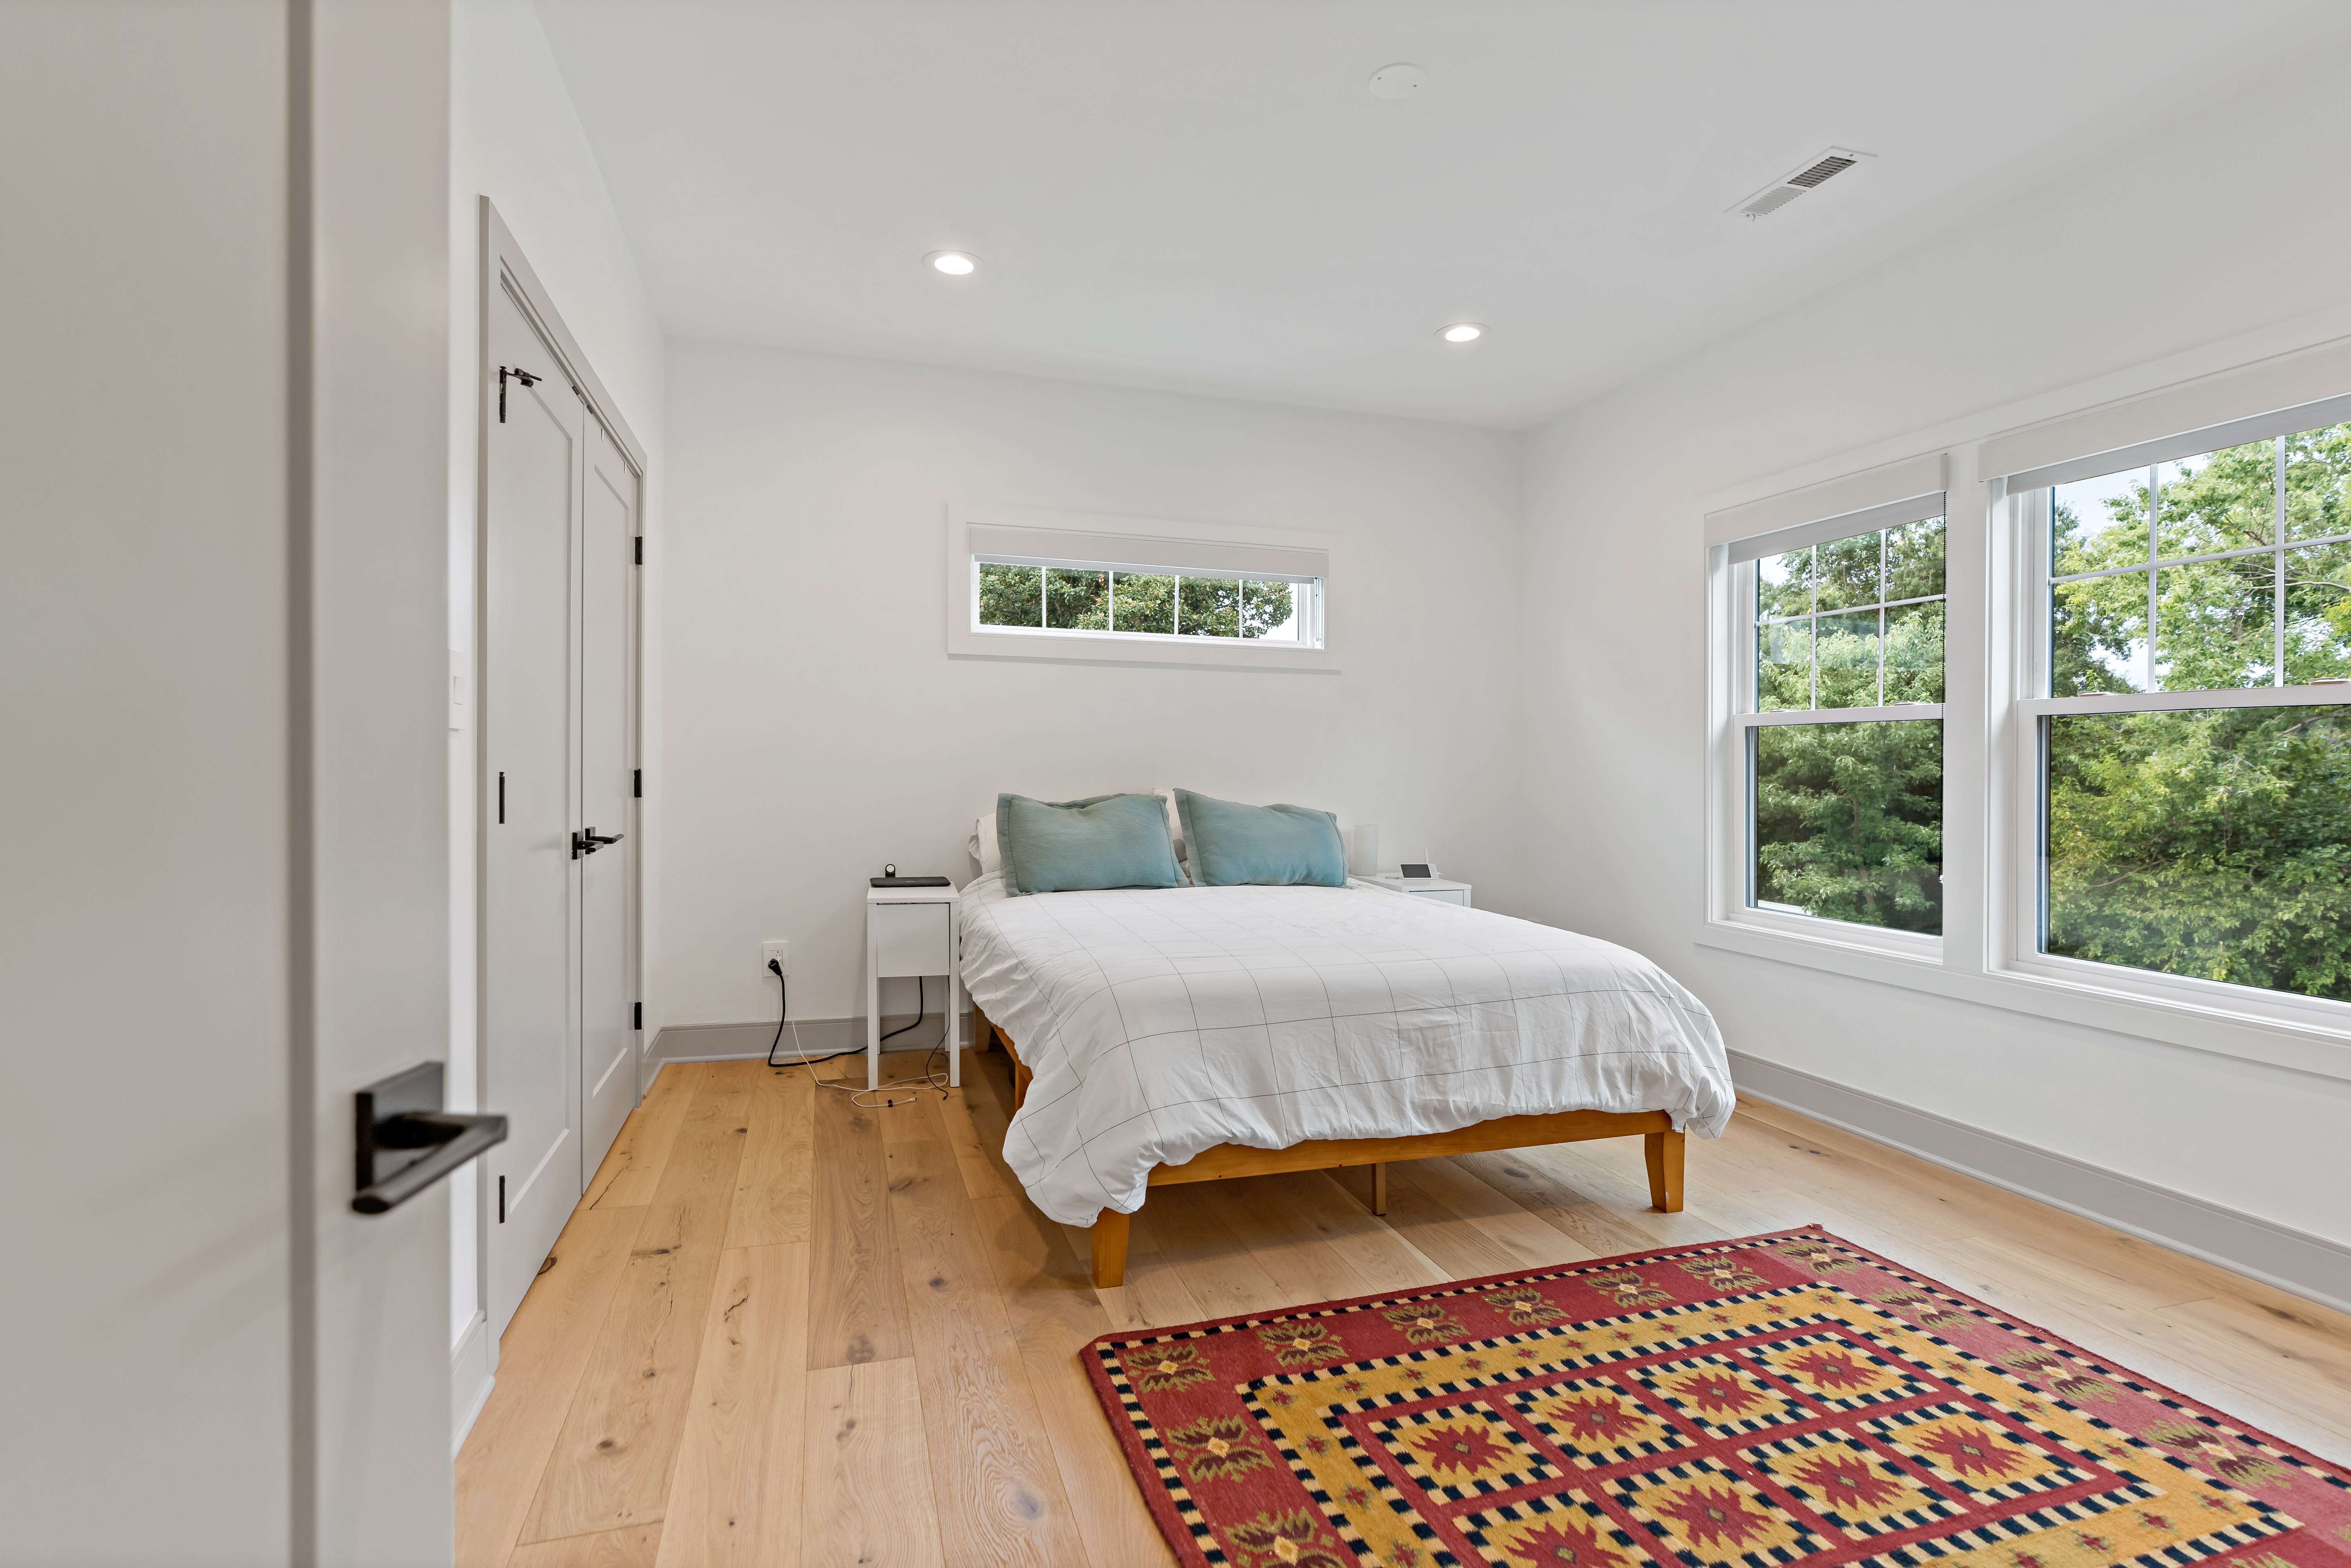 Hardwood floor bedroom with large windows